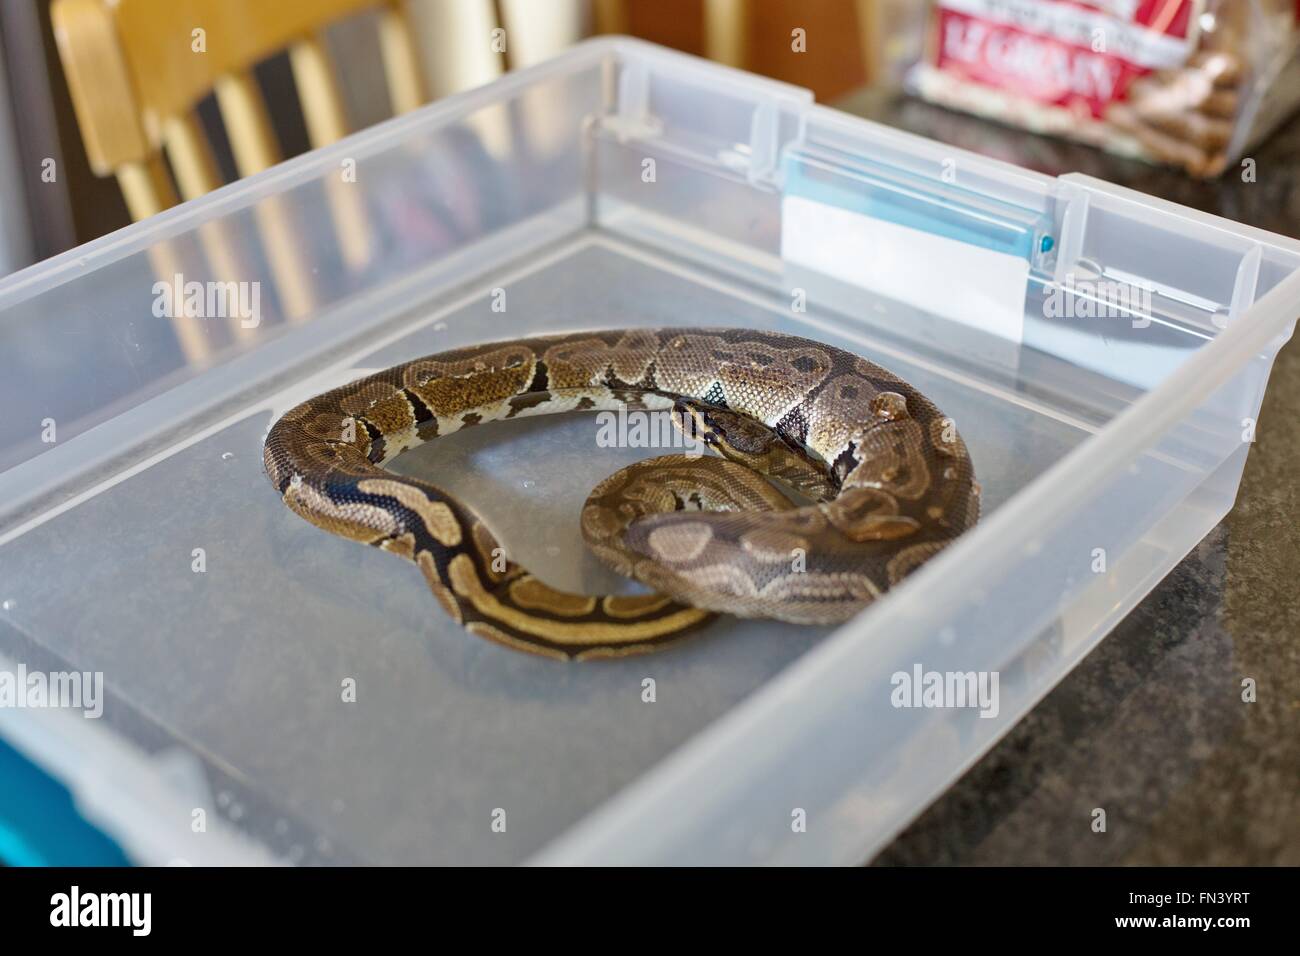 https://c8.alamy.com/comp/FN3YRT/a-small-ball-python-snake-soaking-in-a-tub-of-water-FN3YRT.jpg